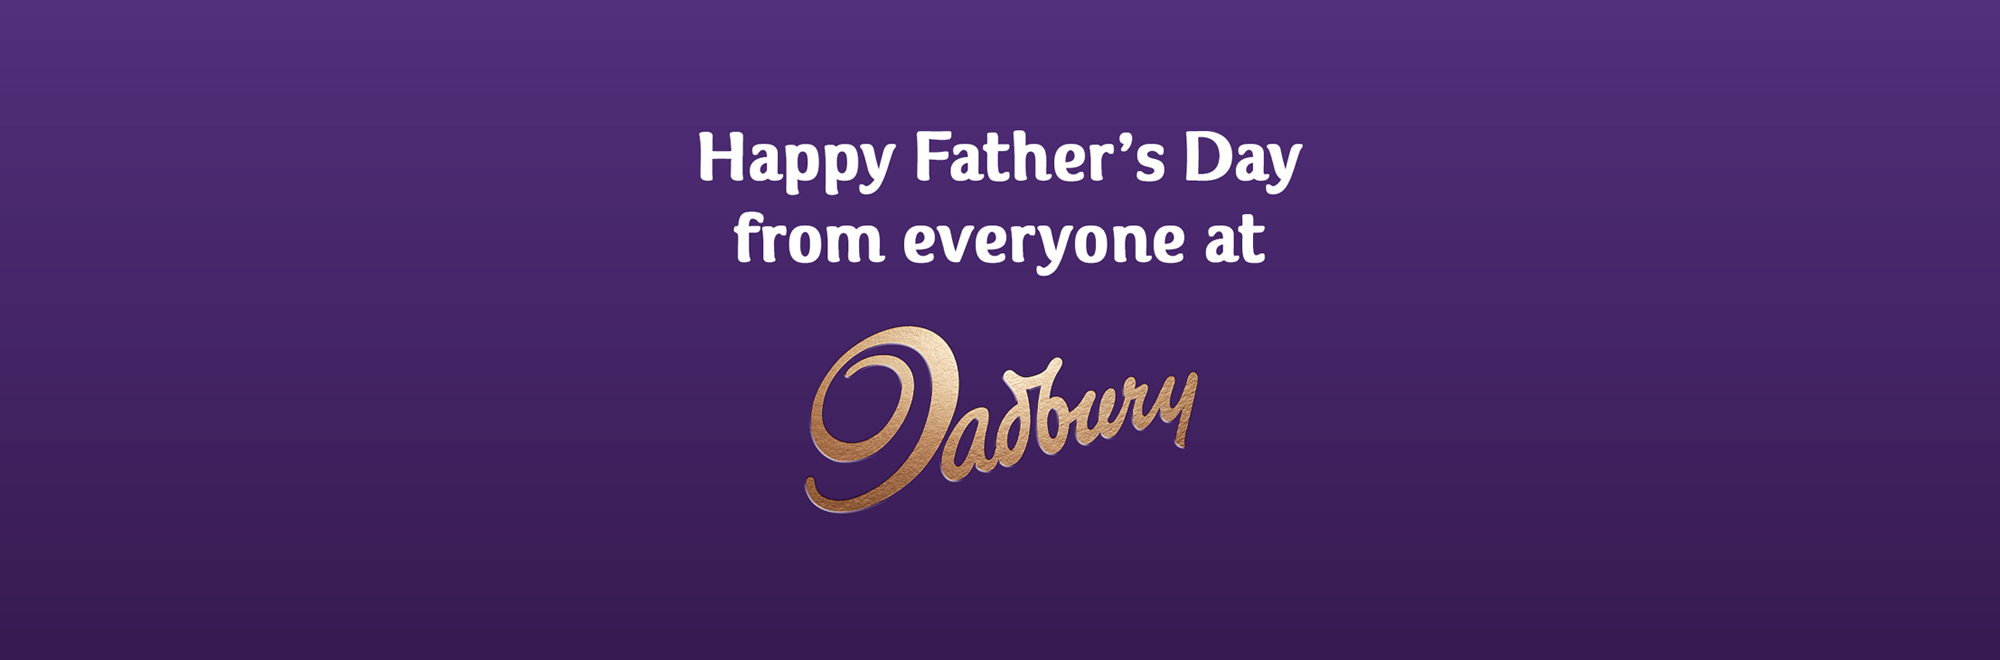 Cadbury becomes Dadbury for Father's Day